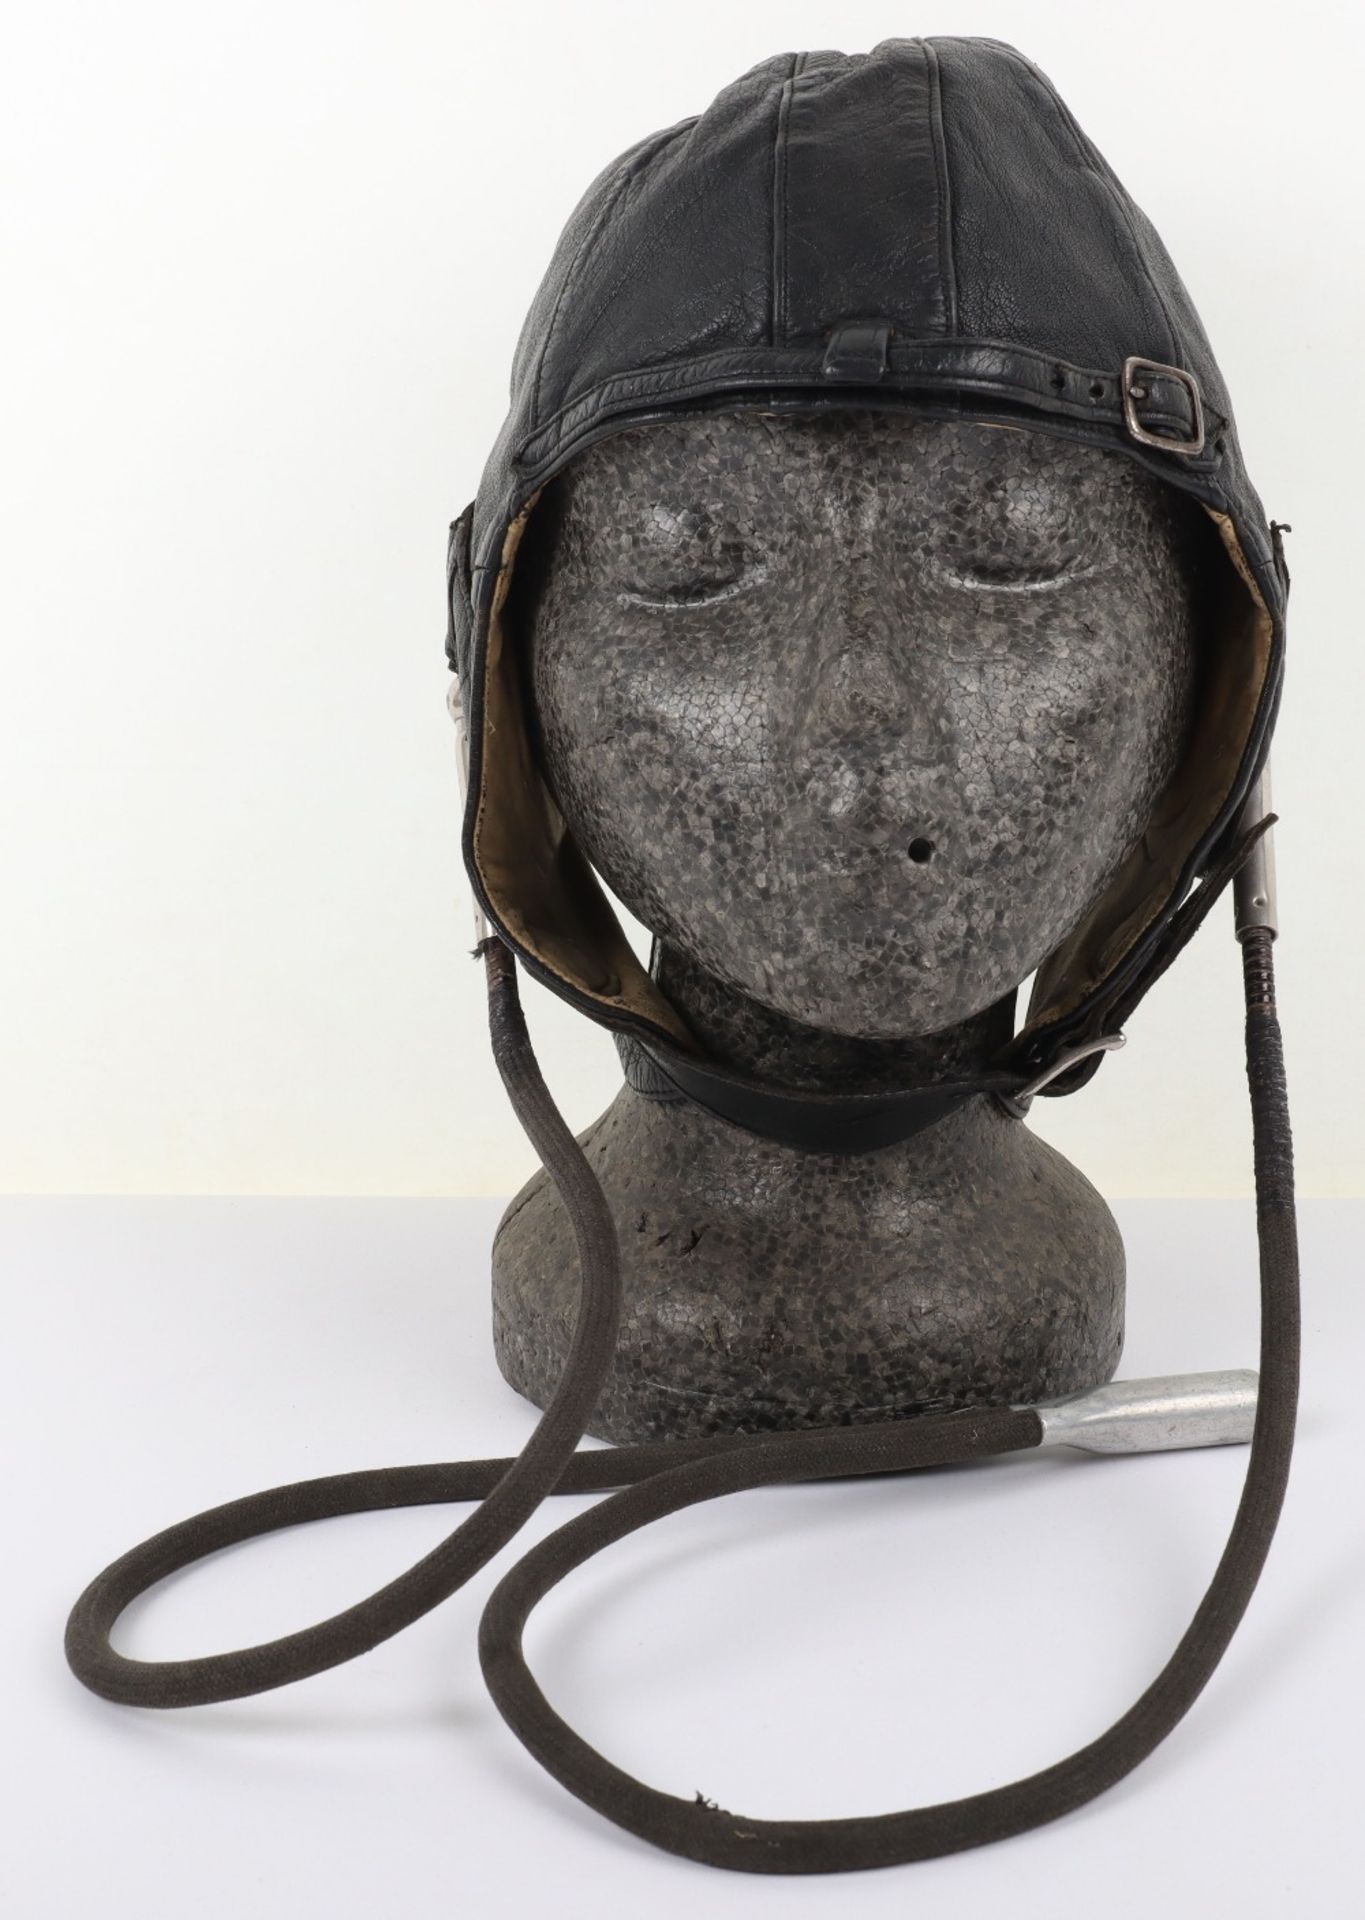 British Lewis Pattern Leather Flying Helmet with Gosport Tubes - Image 9 of 9